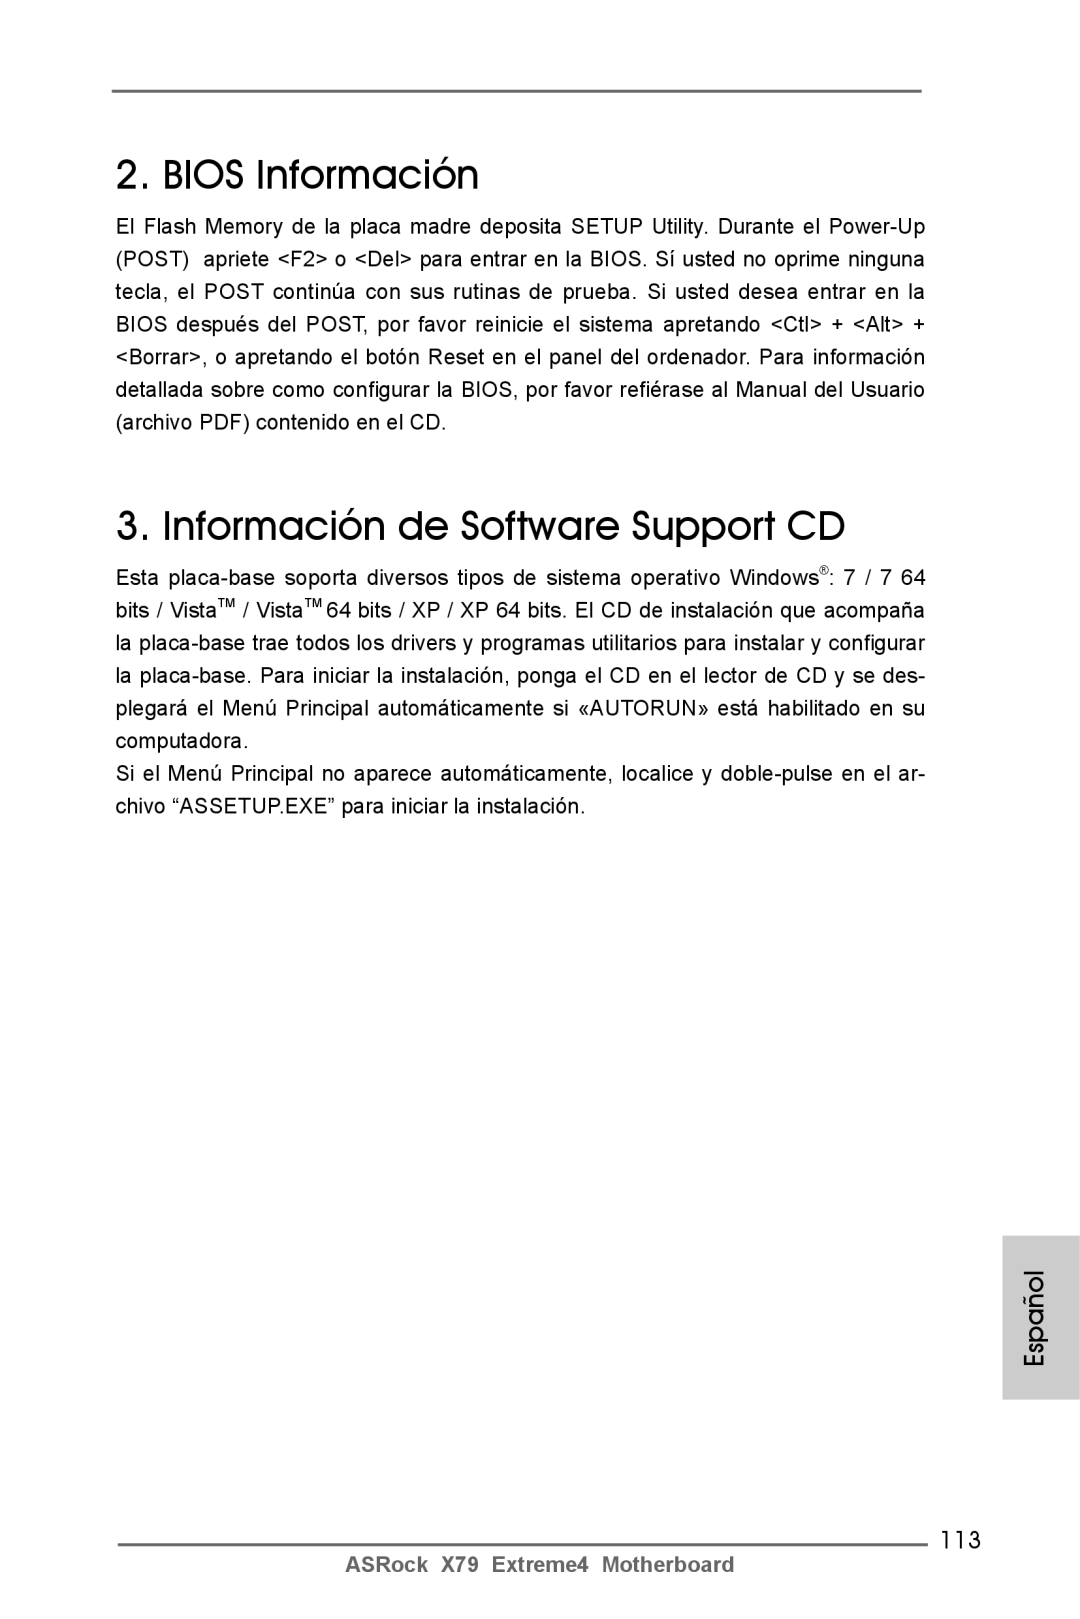 ASRock X79 Extreme4 manual Bios Información Información de Software Support CD, 113 